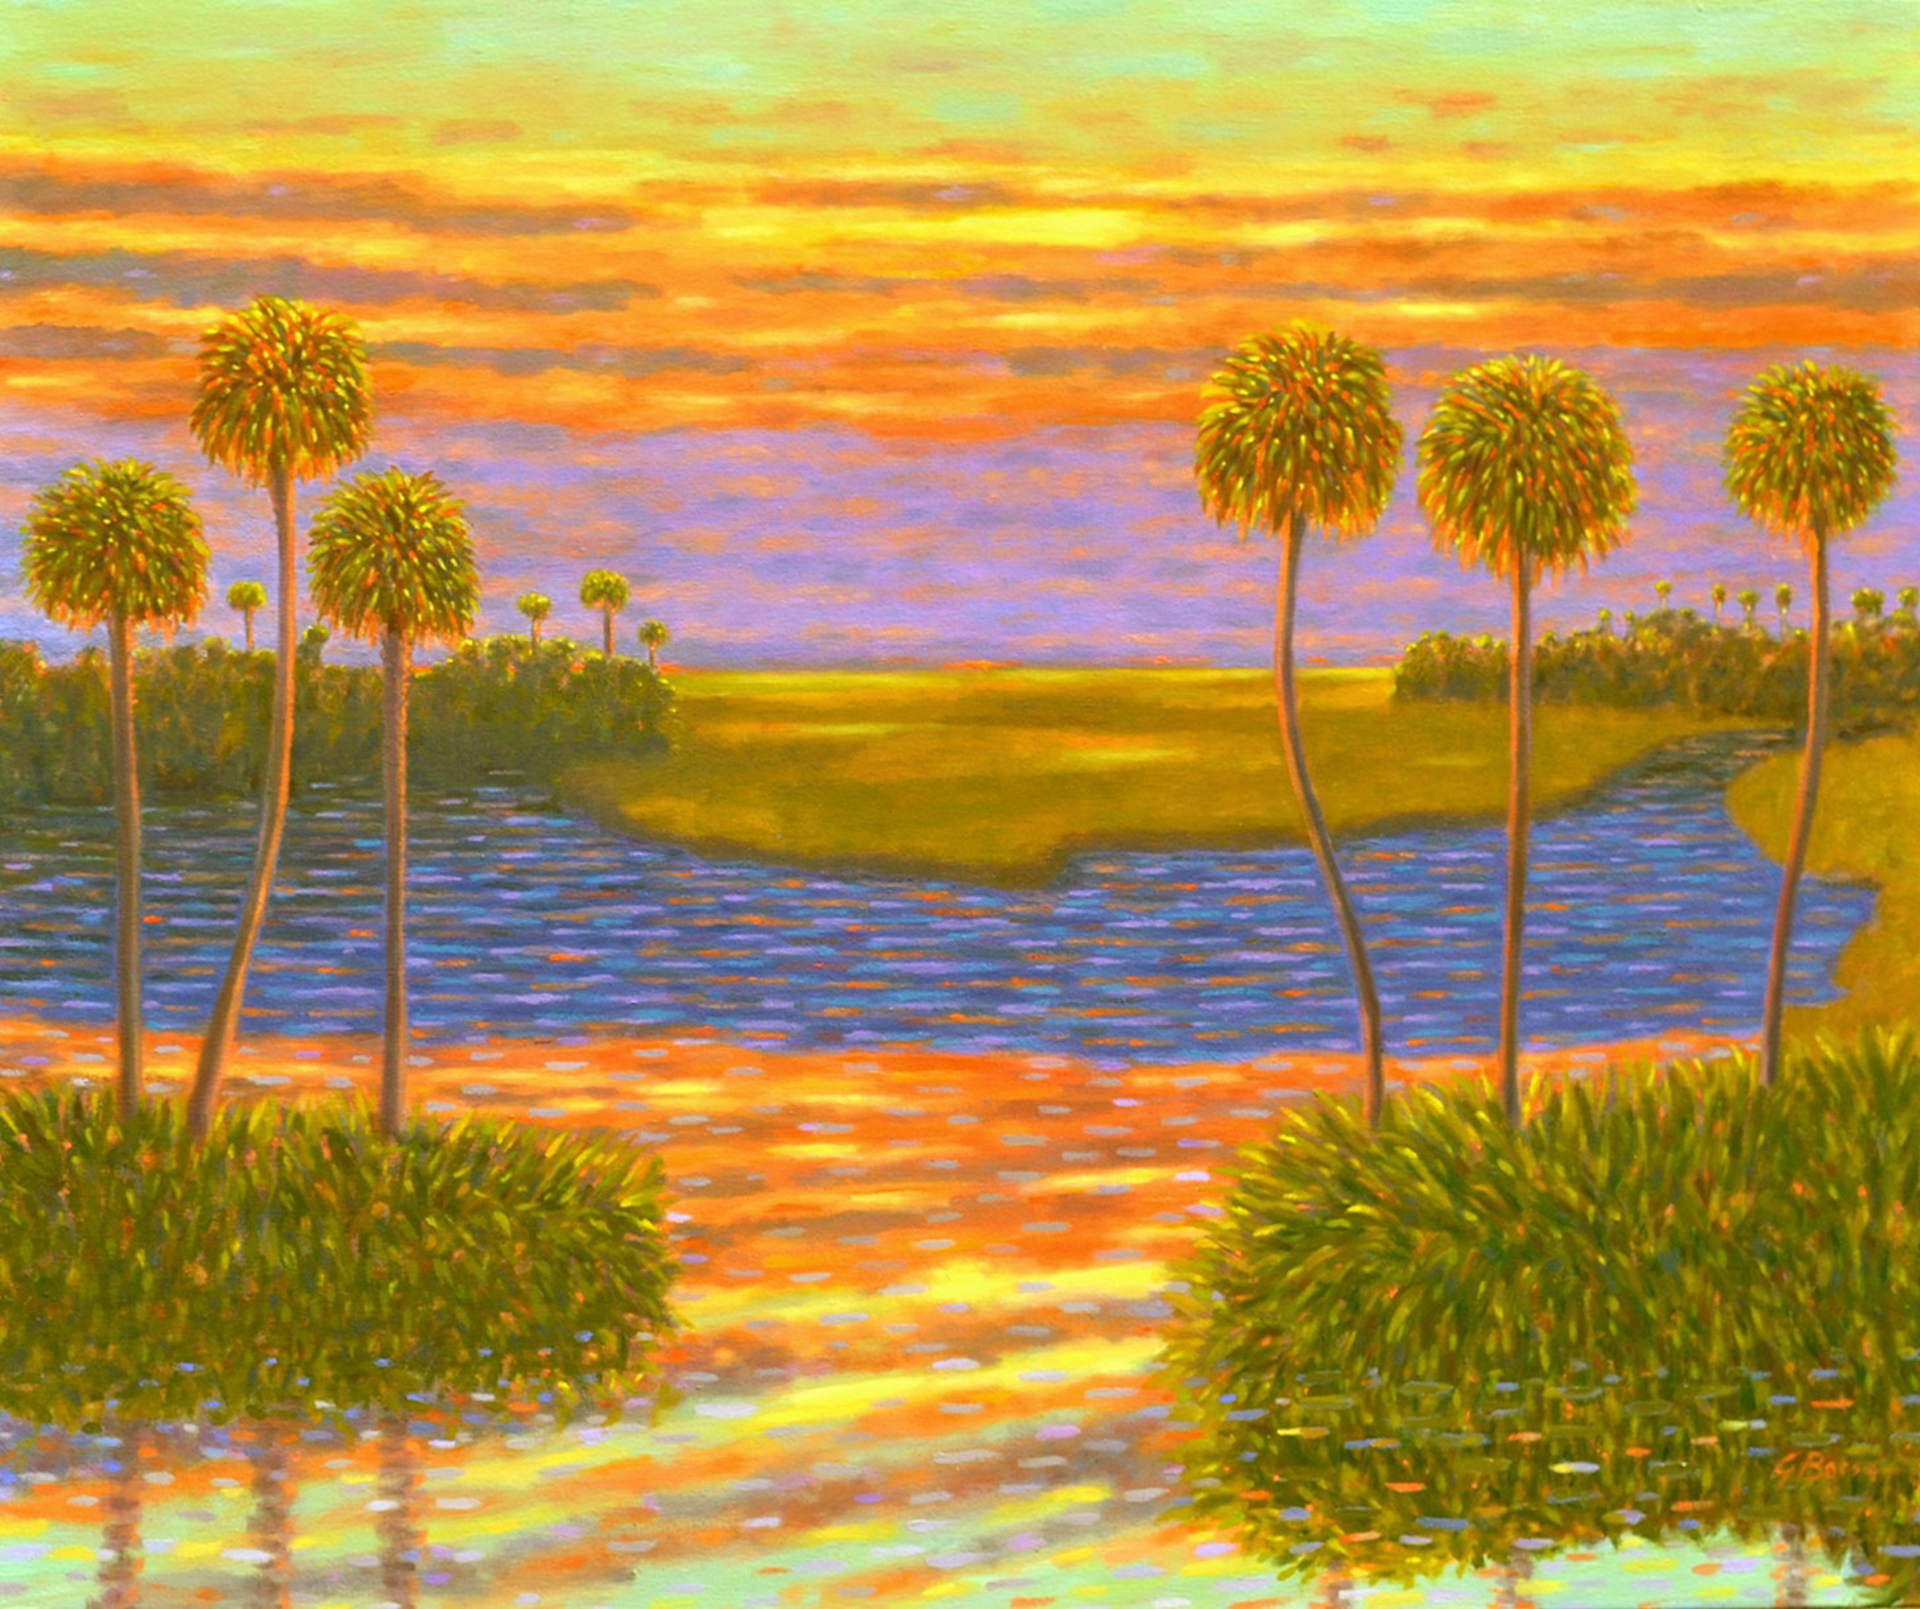 Sunset Interlude by Gary Borse